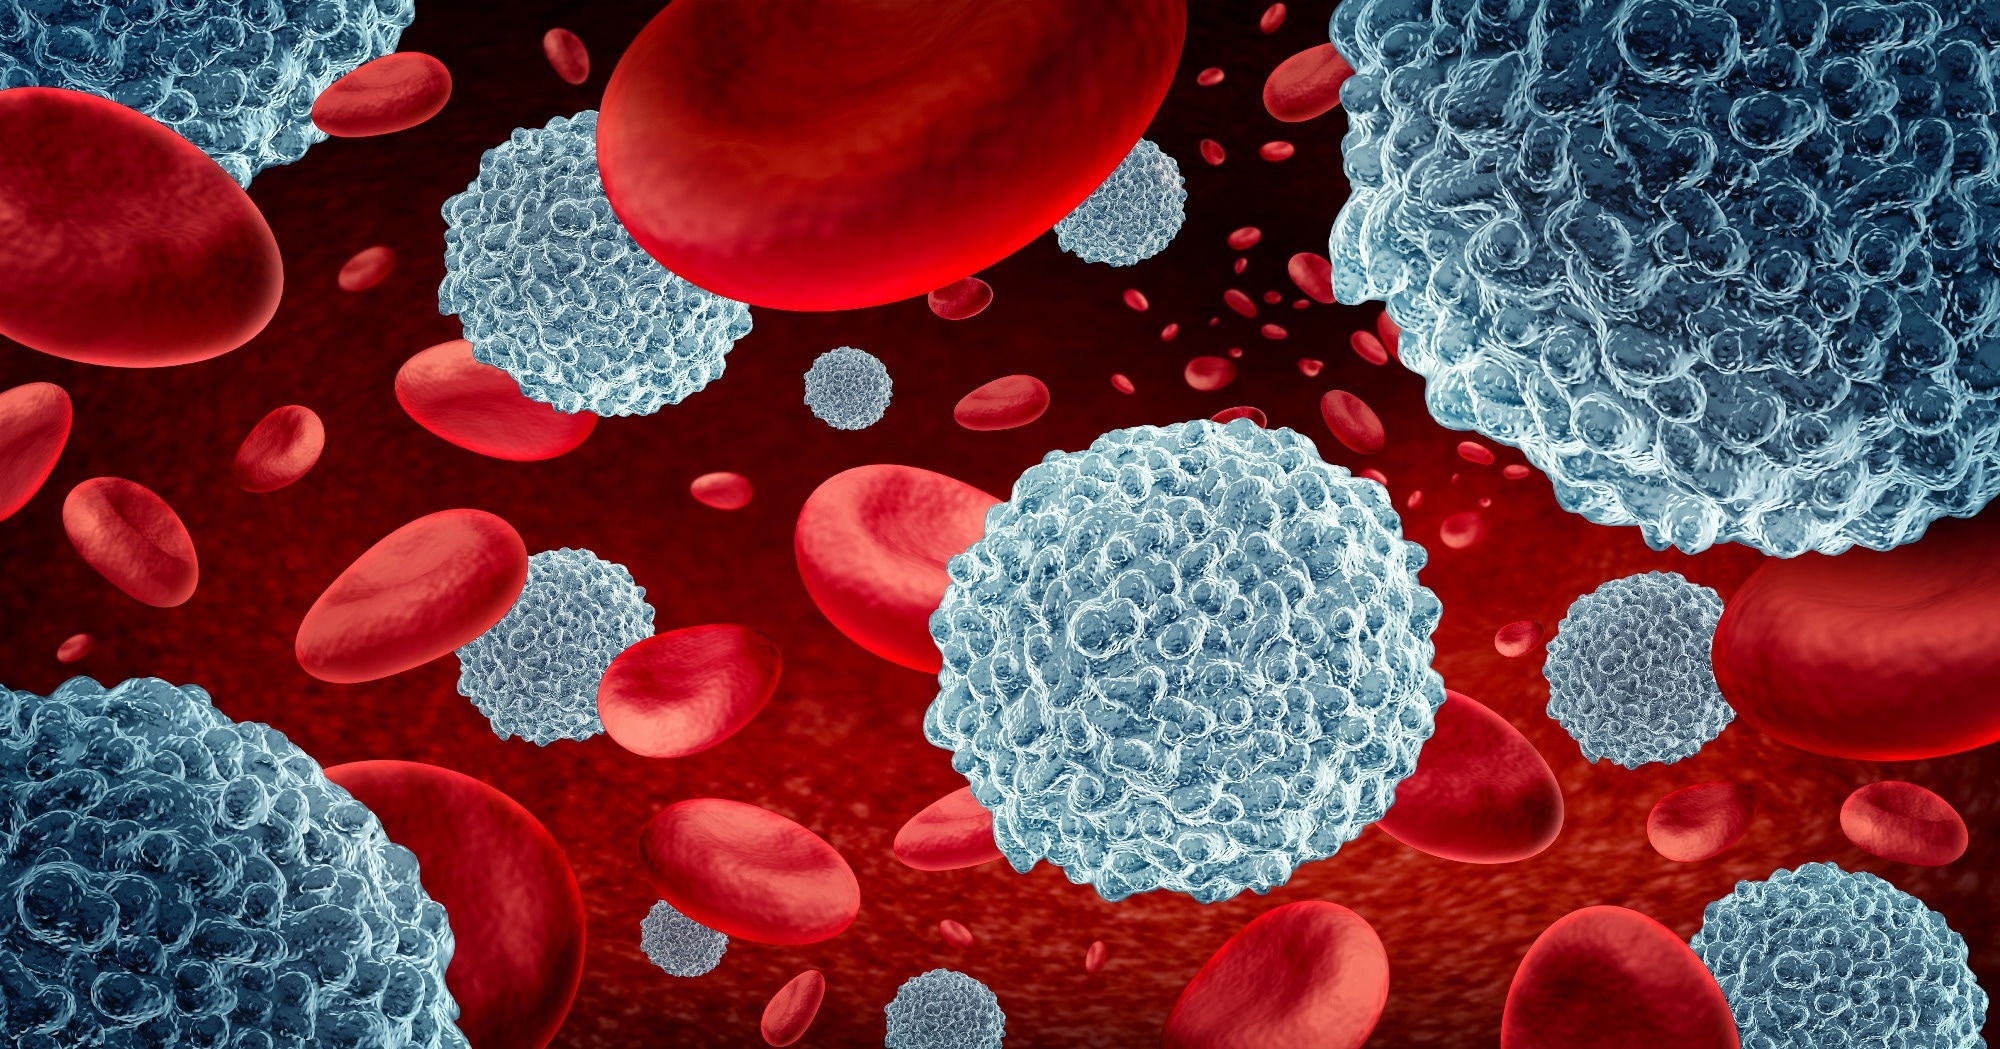 Study: Depleting myeloid-biased haematopoietic stem cells rejuvenates aged immunity. Image Credit: Lightspring / Shutterstock.com